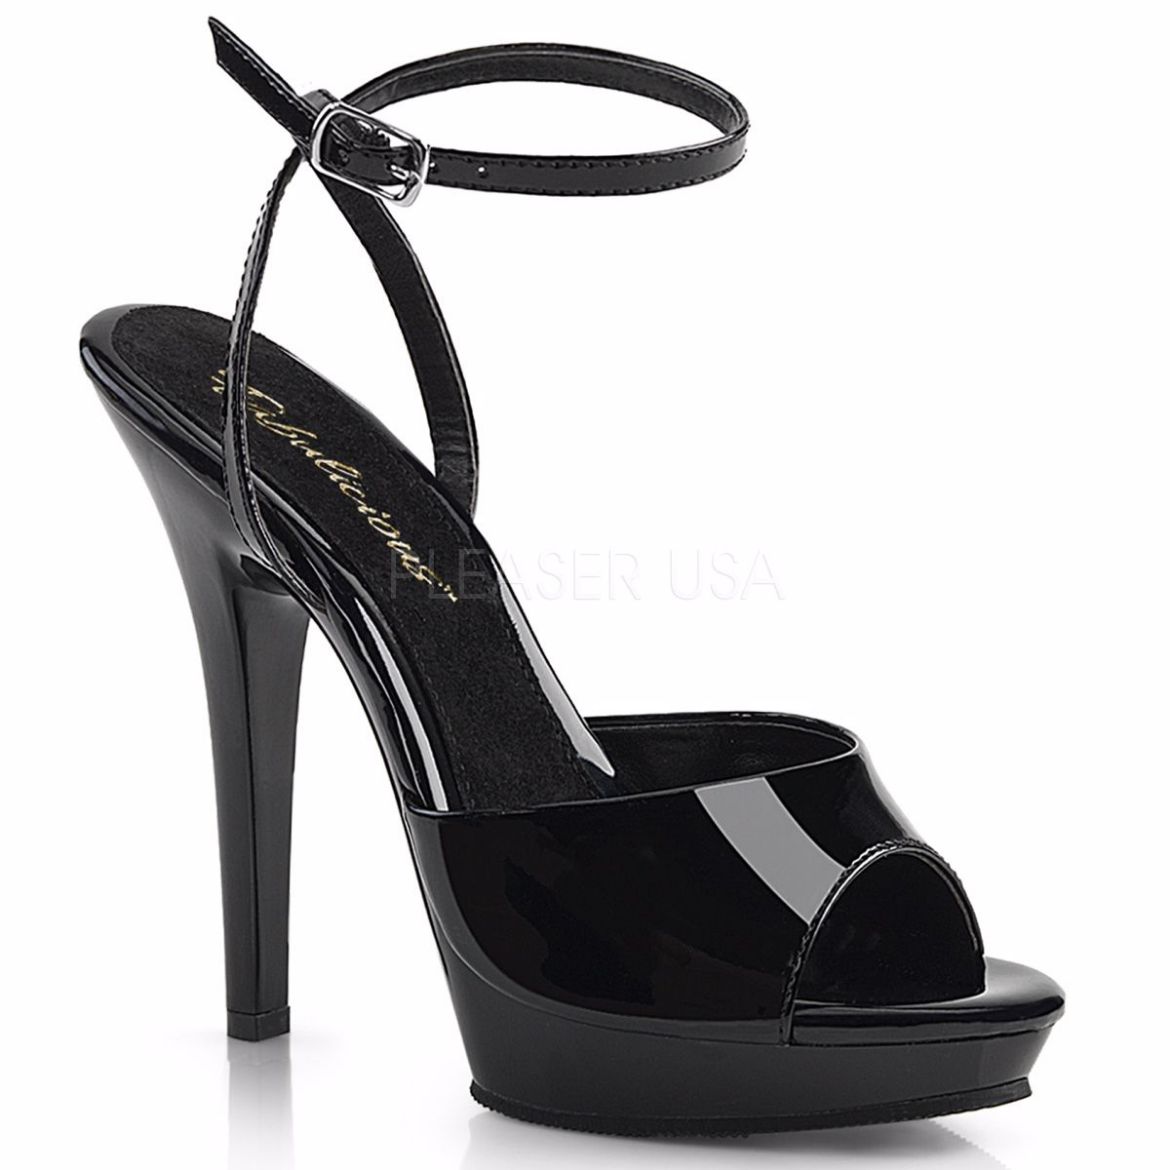 Product image of Fabulicious Lip-125 Black Patent/Black, 5 inch (12.7 cm) Heel, 3/4 inch (1.9 cm) Platform Sandal Shoes